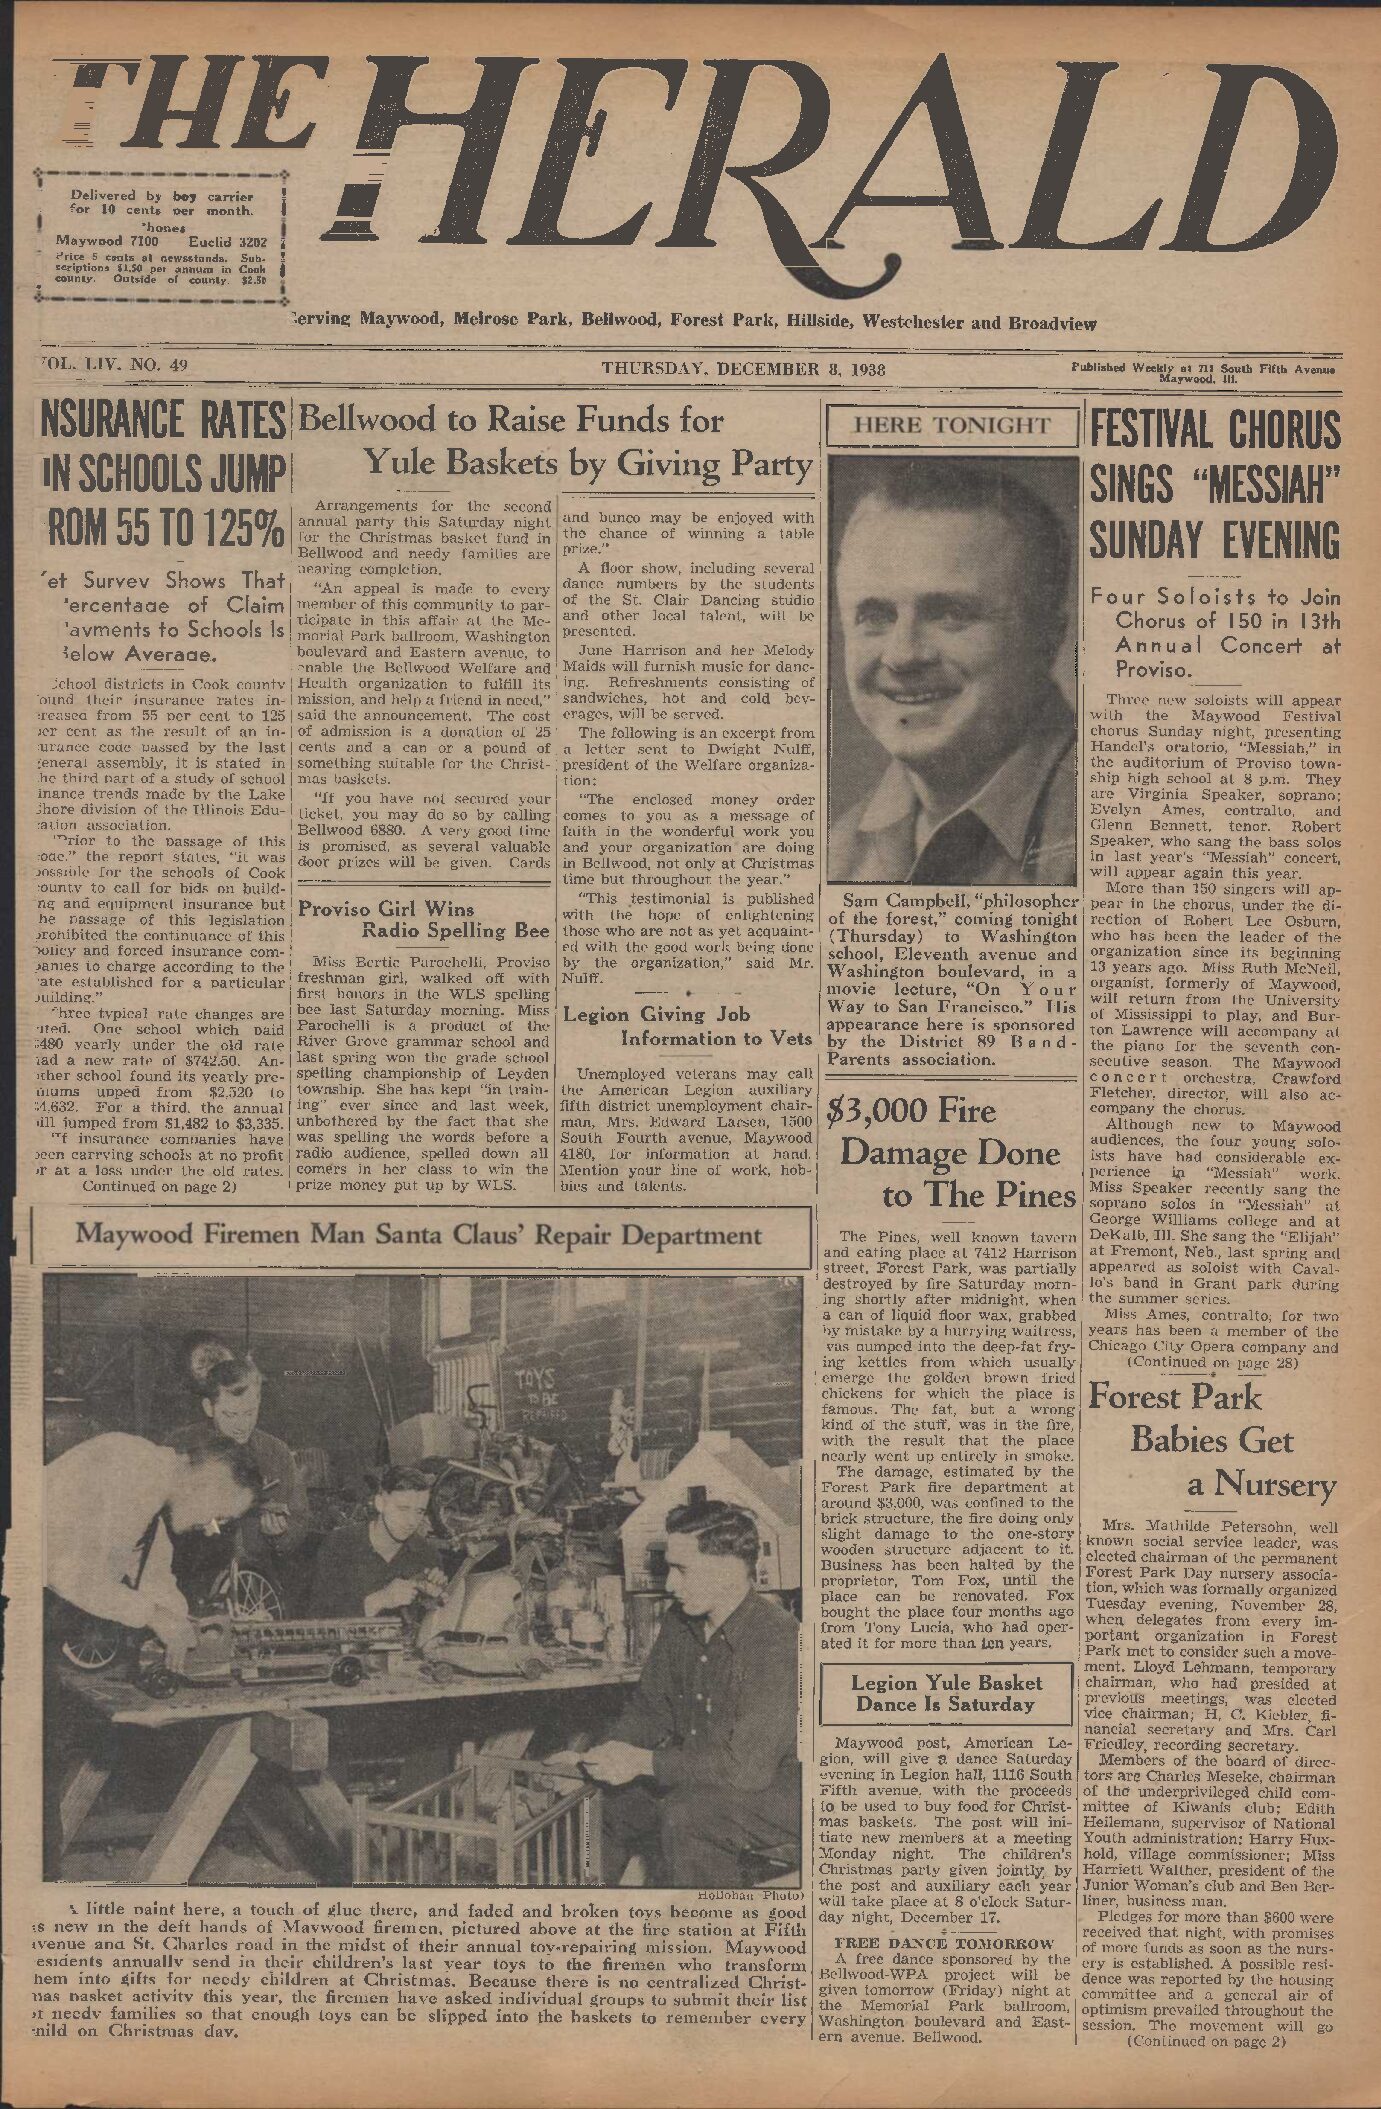 The Herald – 19381208